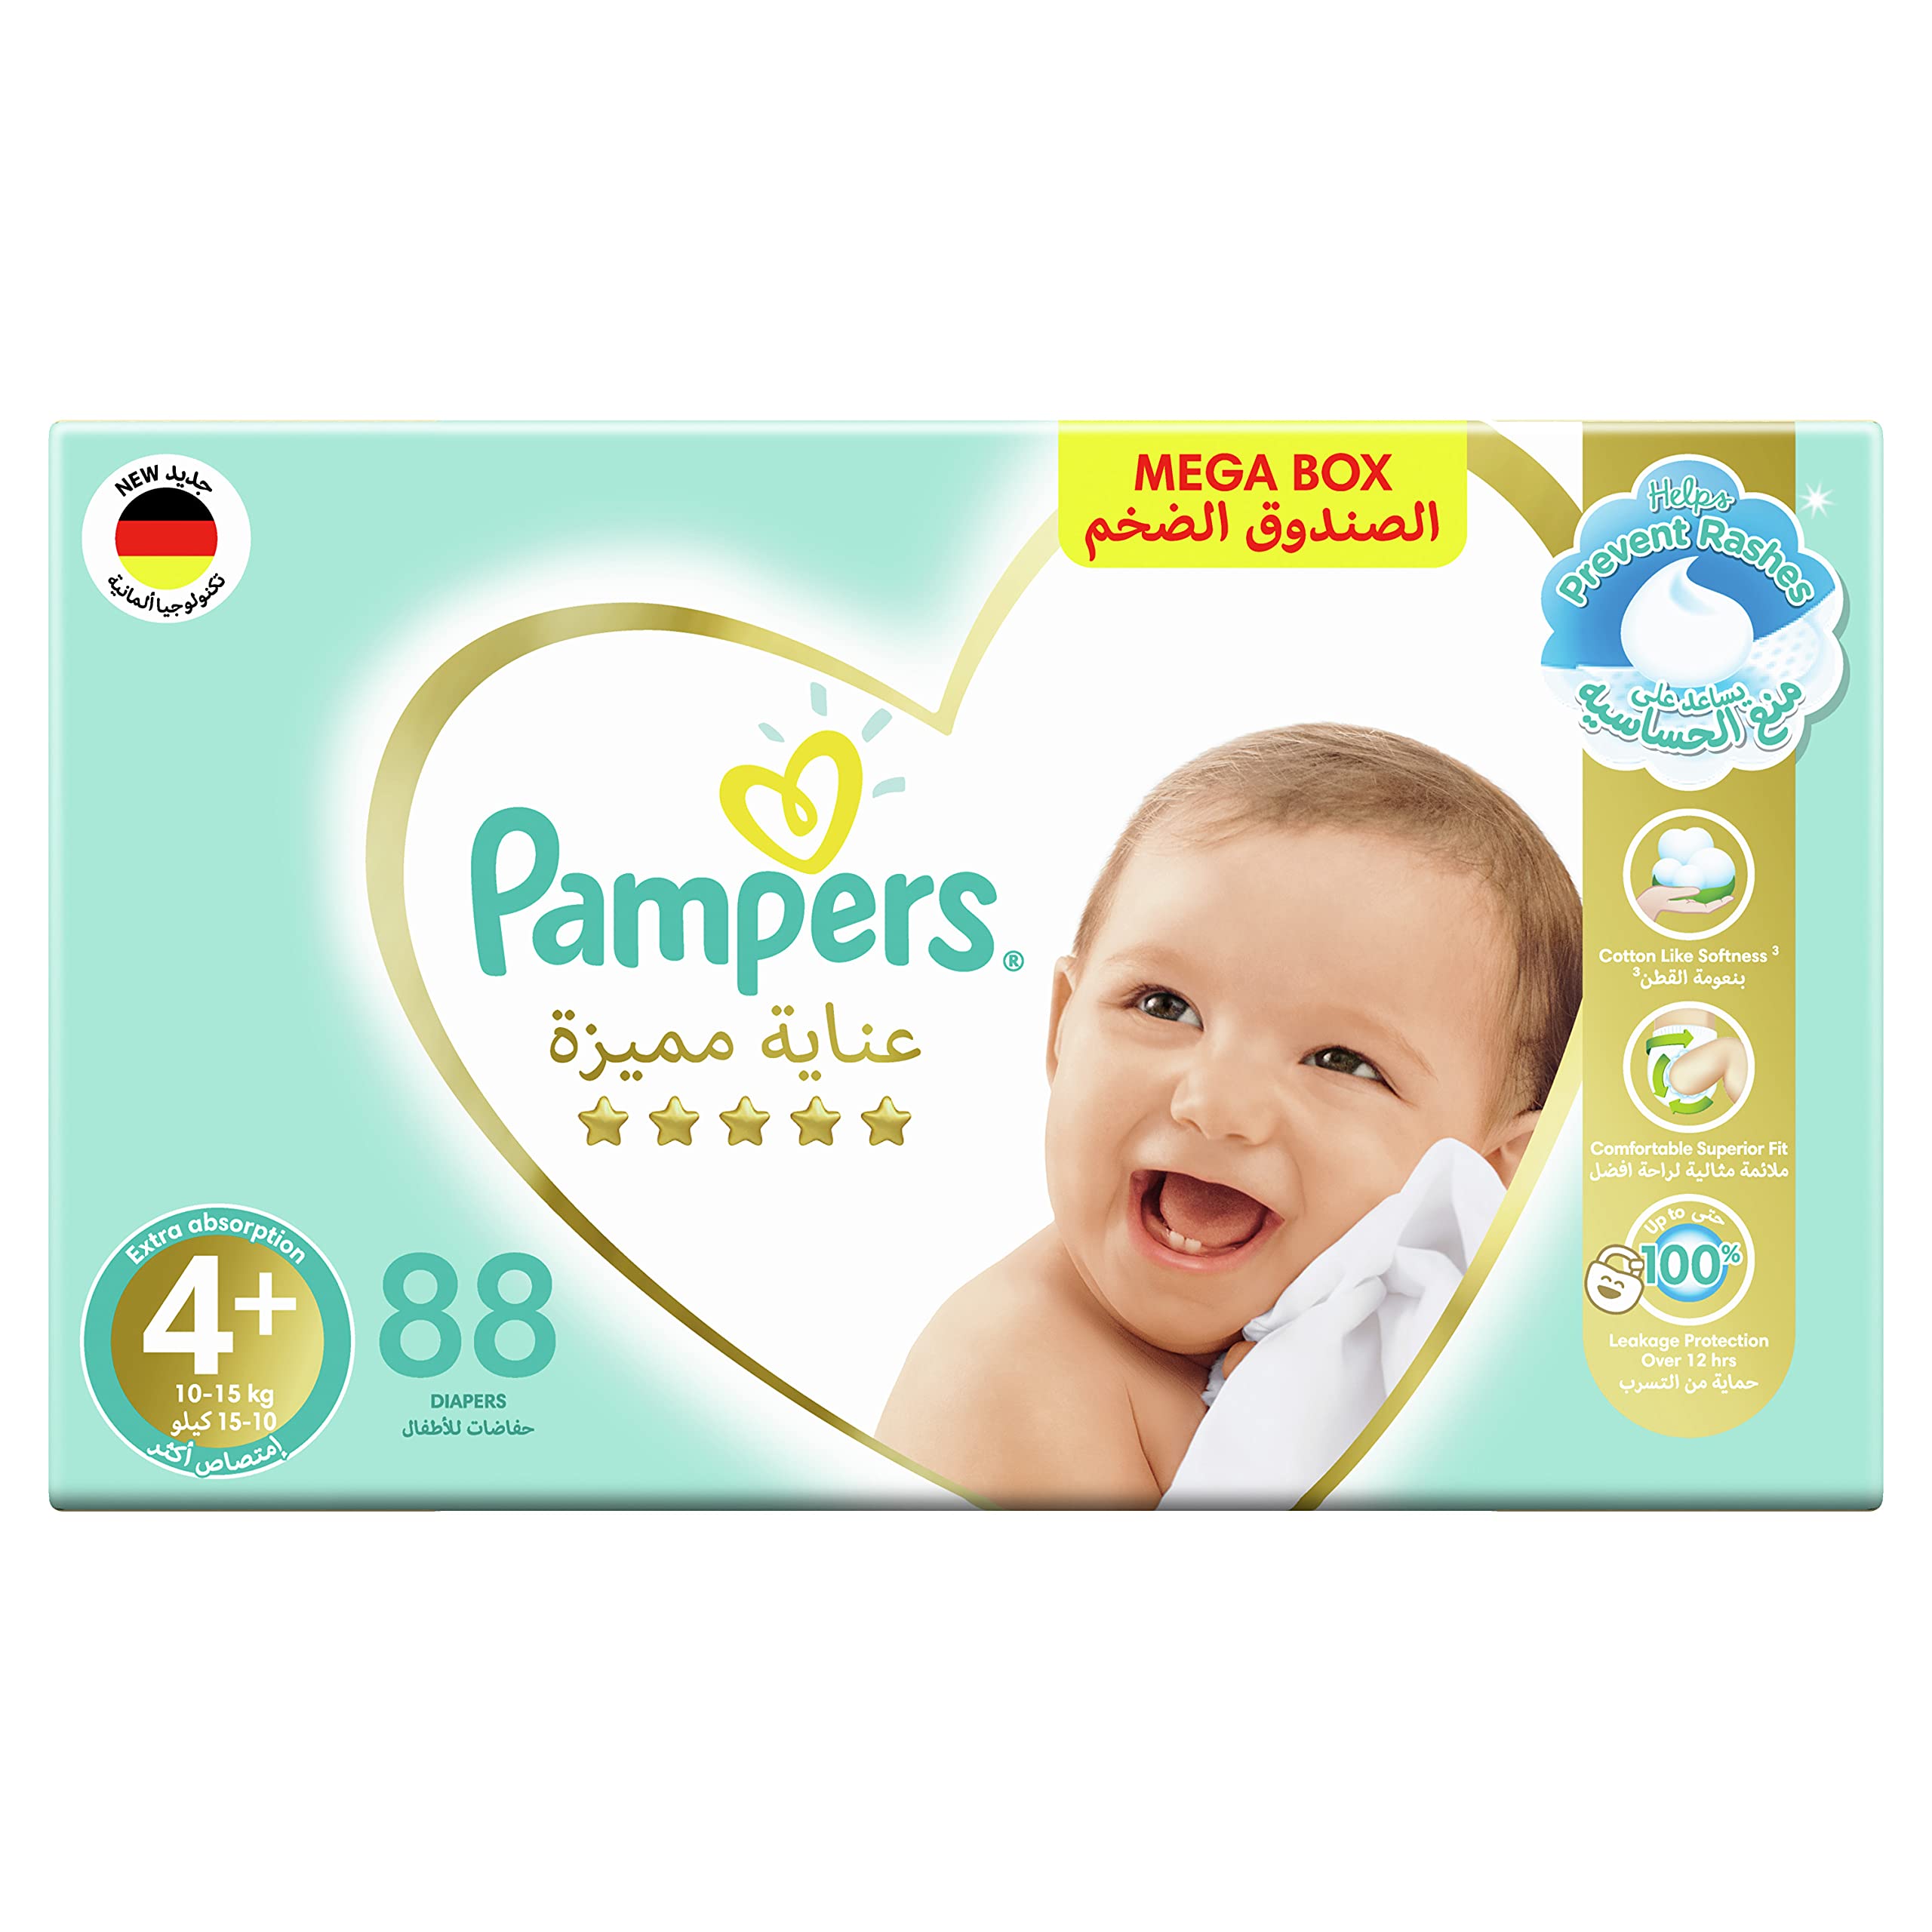 Pampers Premium Care Diapers, Size 4+, 10-15 kg, The Softest Diaper and the Best Skin Protection, 88 Baby Diapers بامبرز حفاضات بريميوم كير، مقاس 4+، 10-15 كجم، حفاضات انعم وافضل حماية للبشرة، 88 حفاضة اطفال